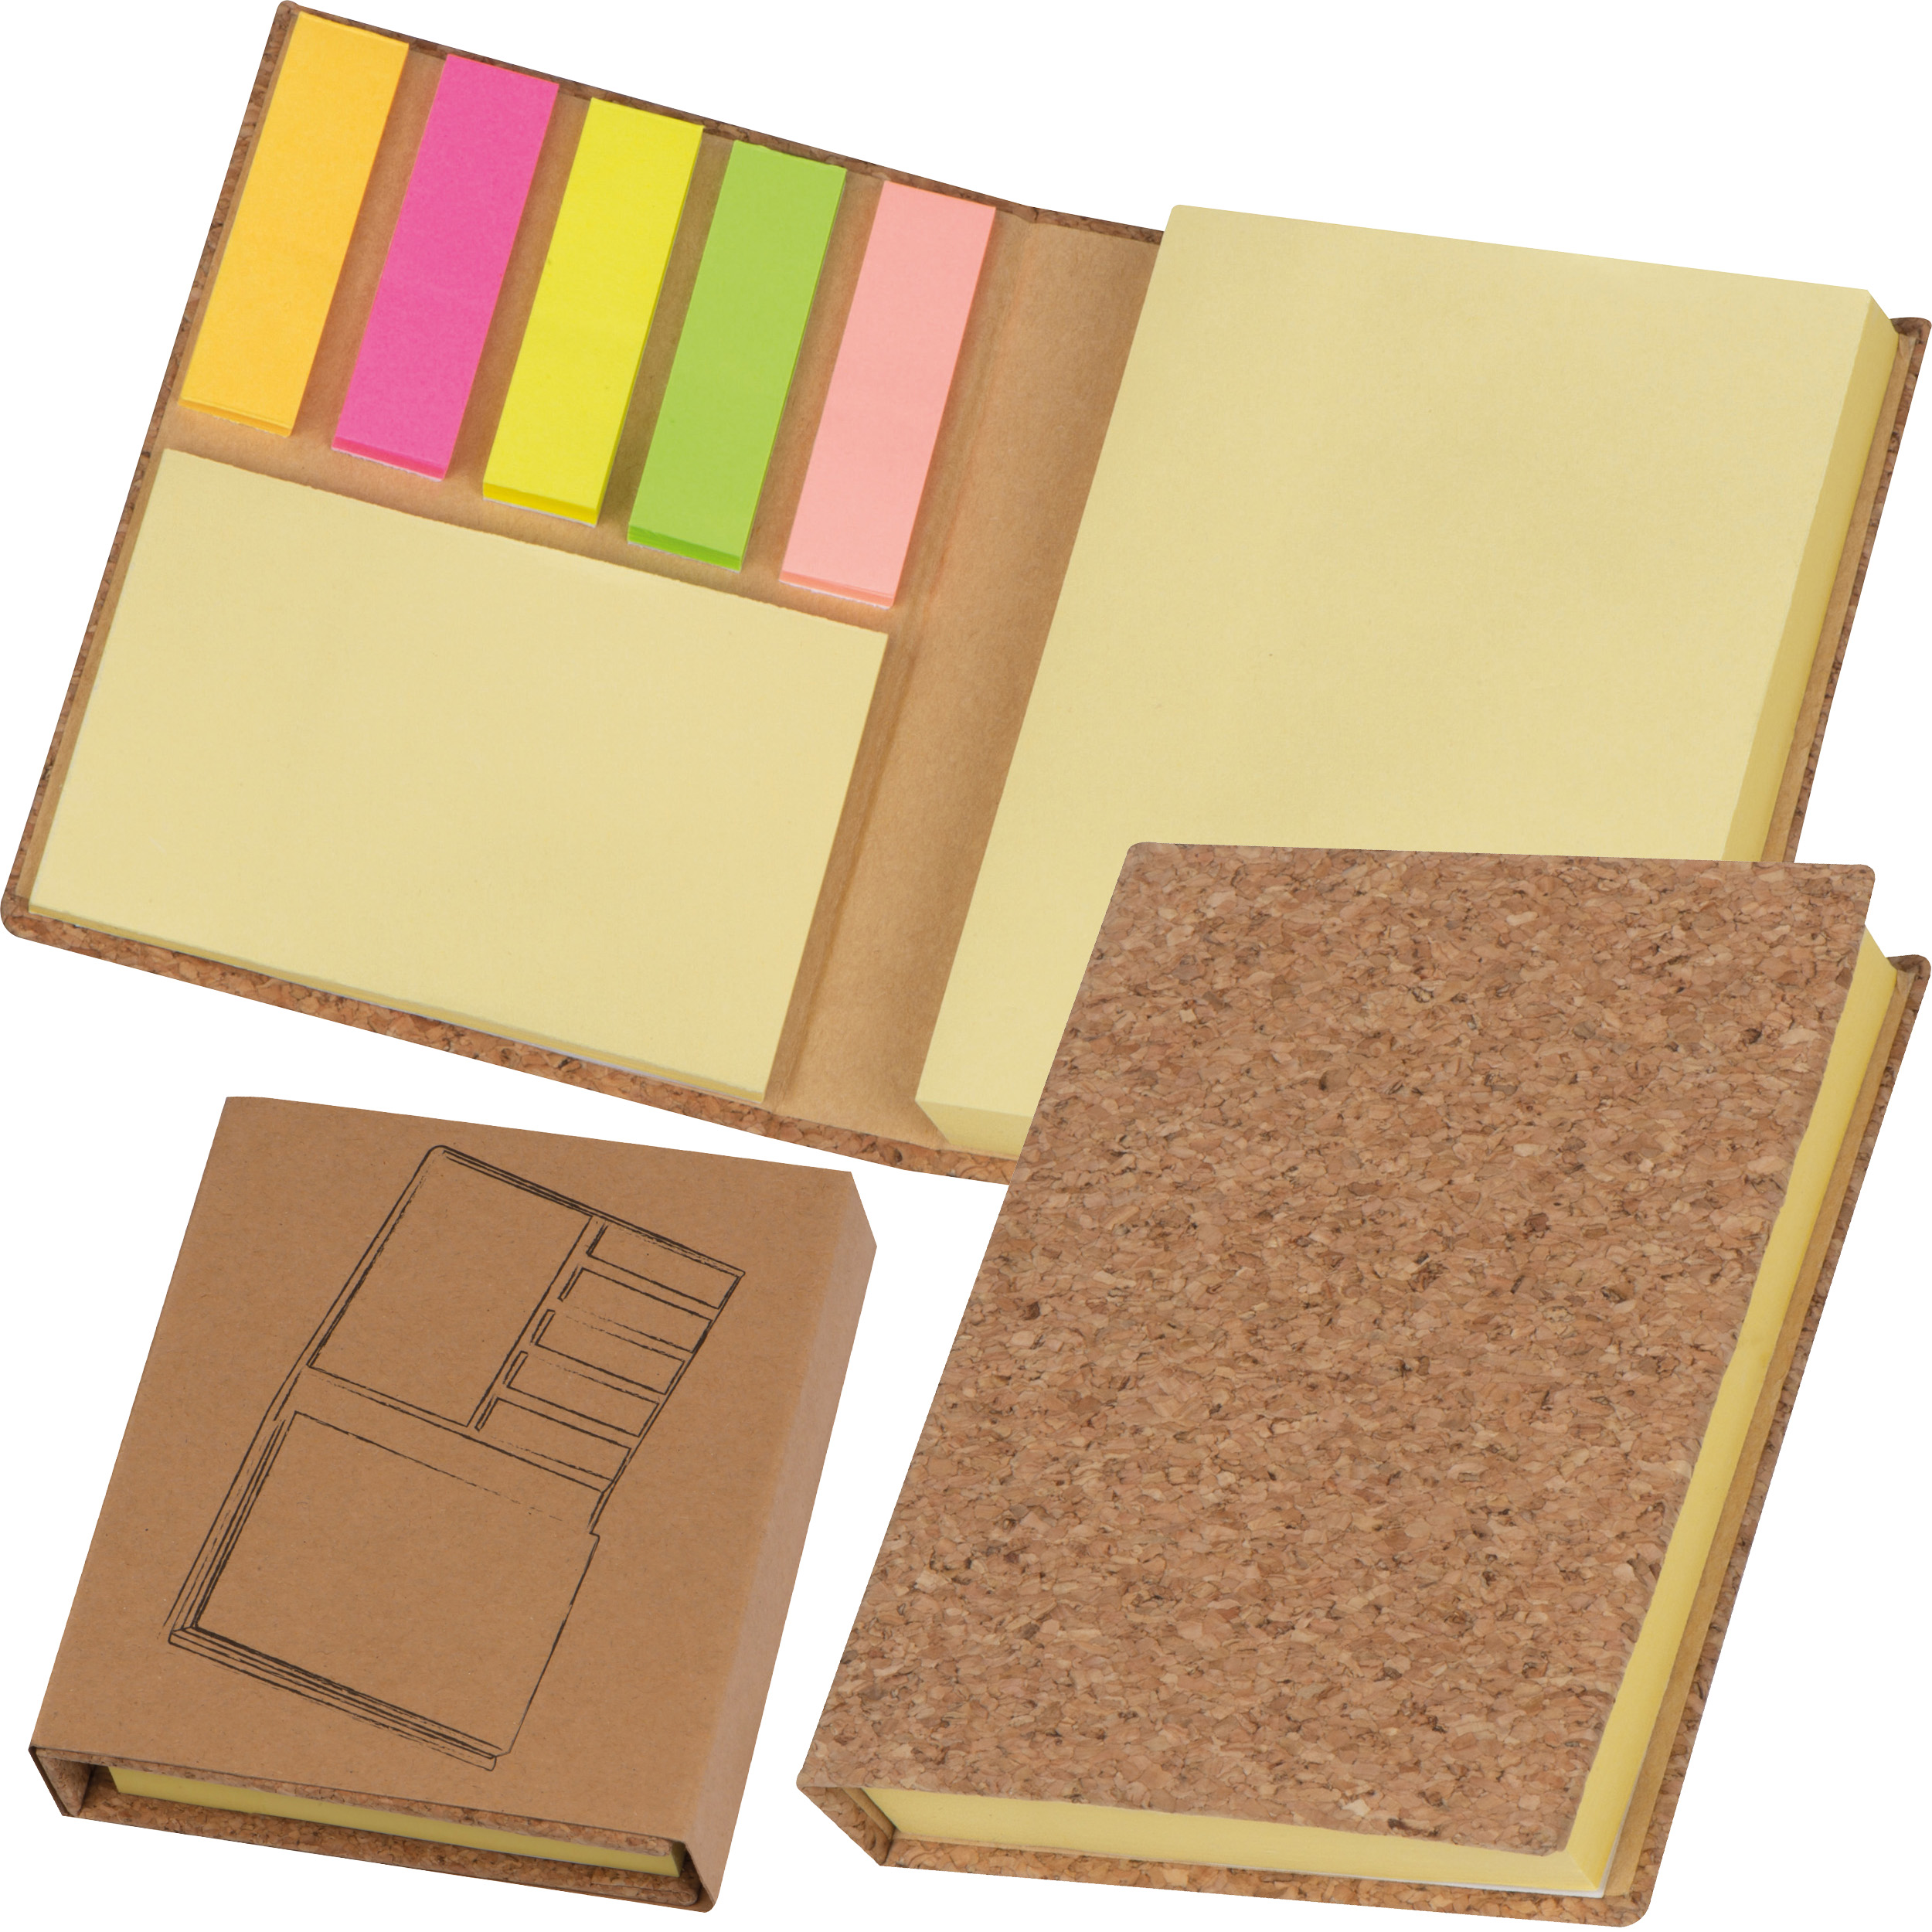 Sticky marker and sticky note book in a cork envelope